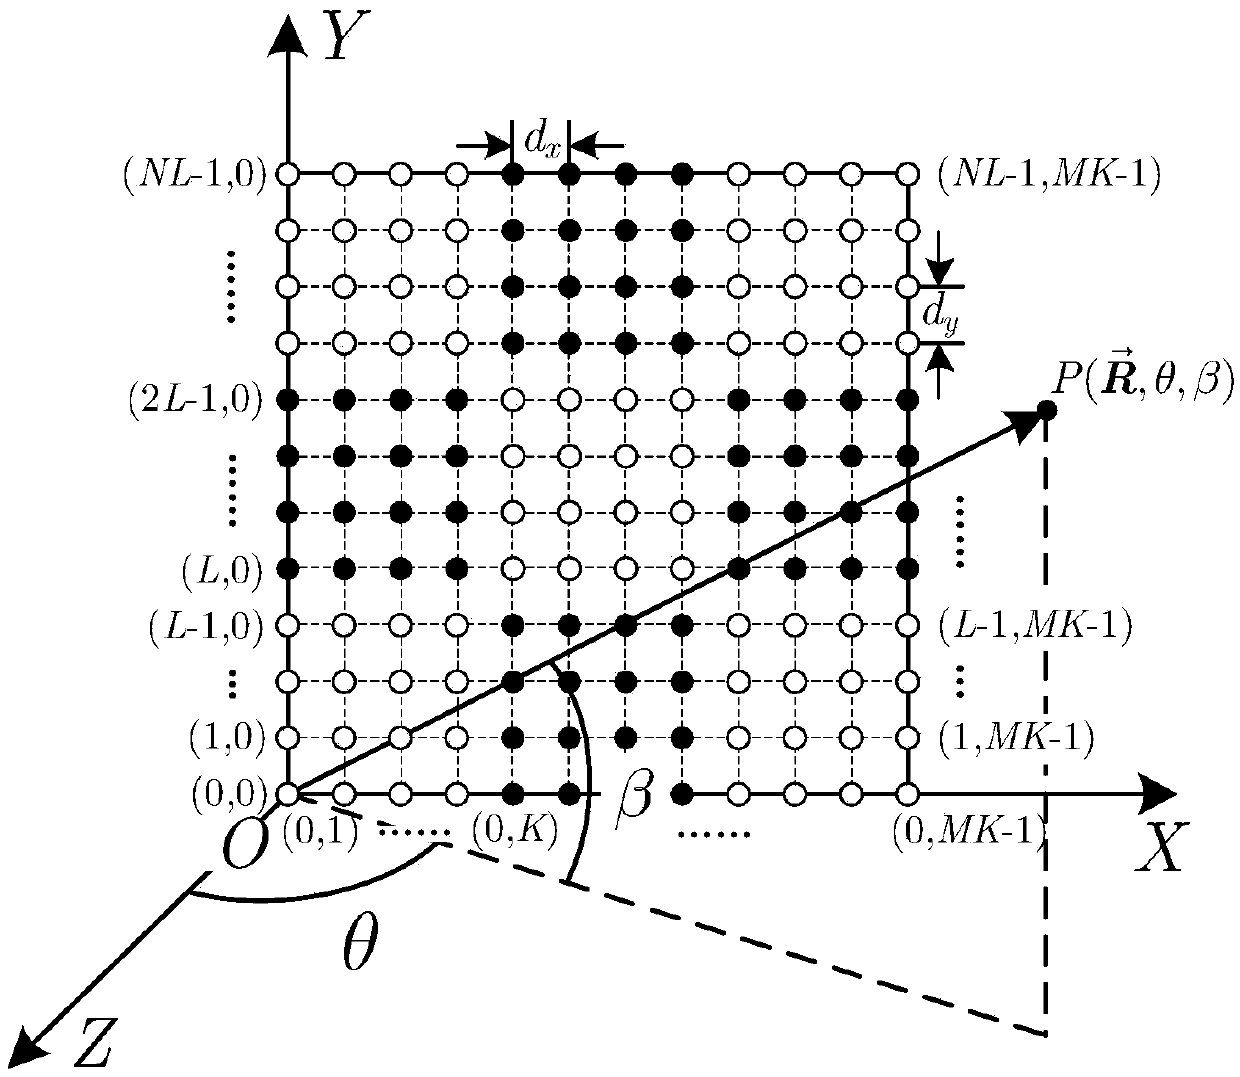 Three-dimensional correlated imaging method based on phased array radar